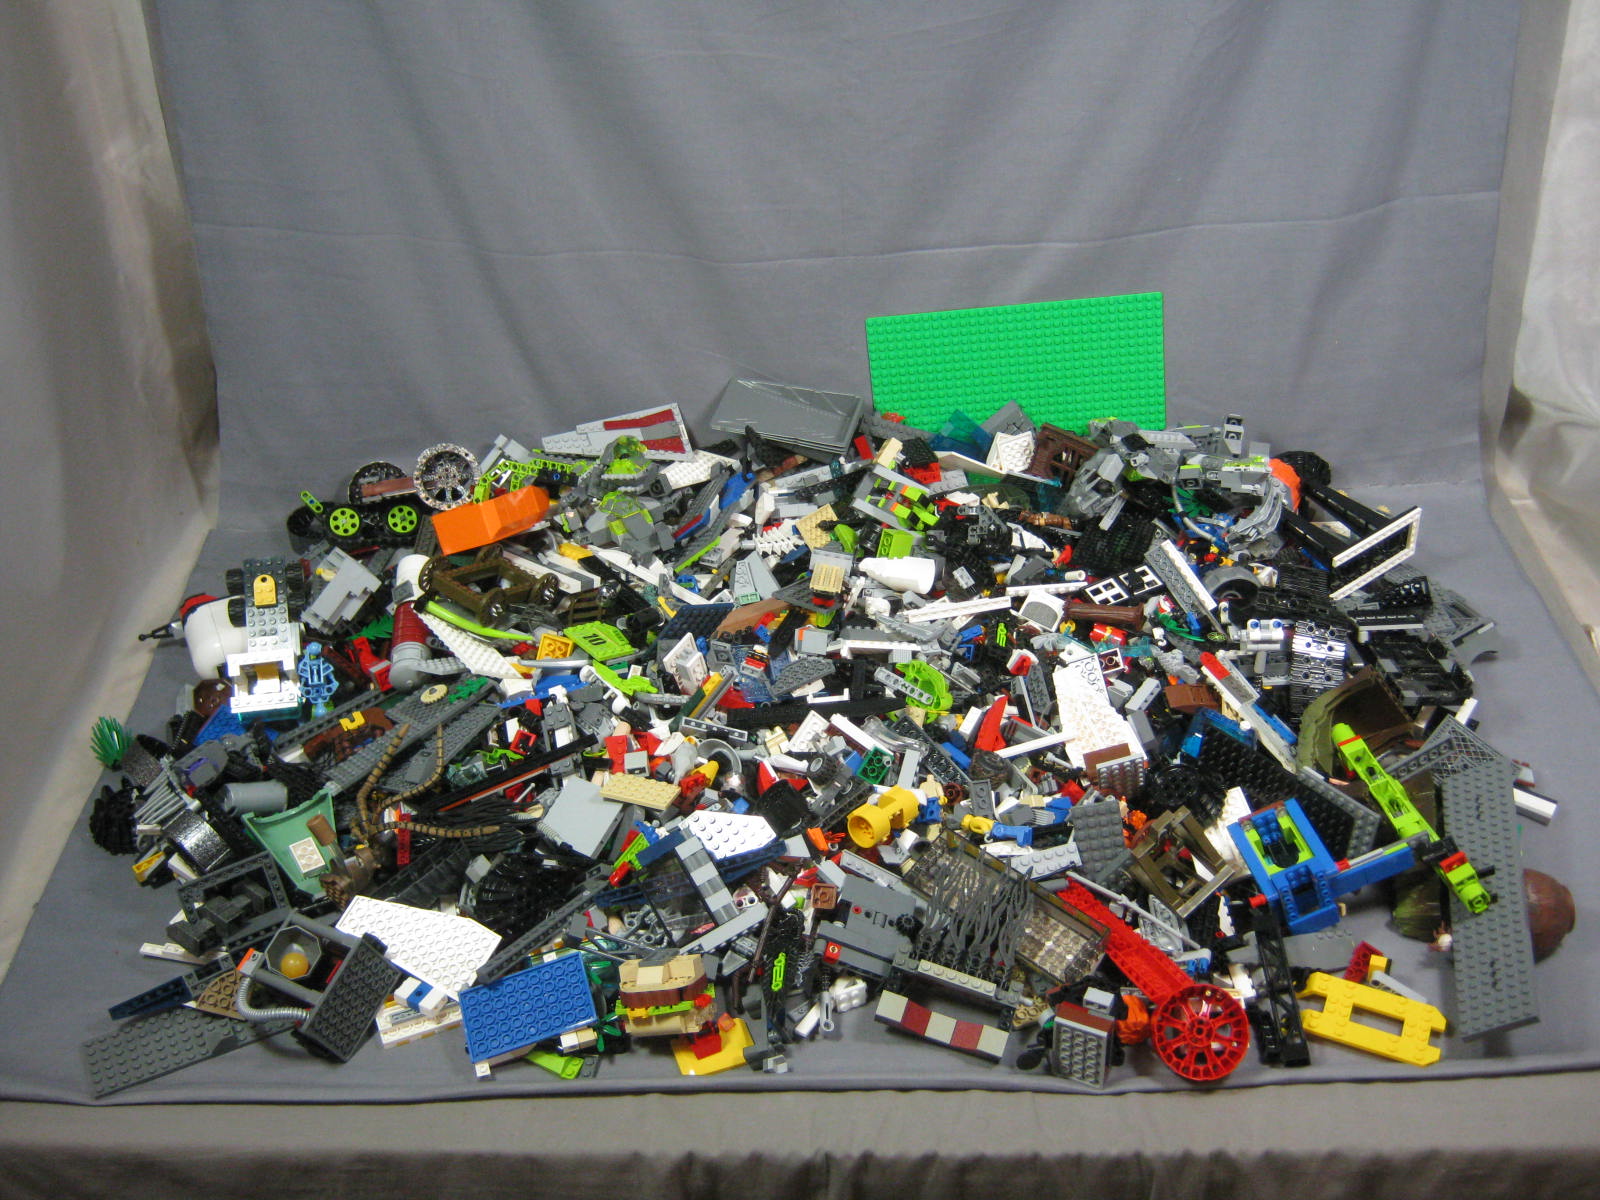 17 Lb Pound Mixed Lego Blocks Parts Pieces Bulk Lot NR!